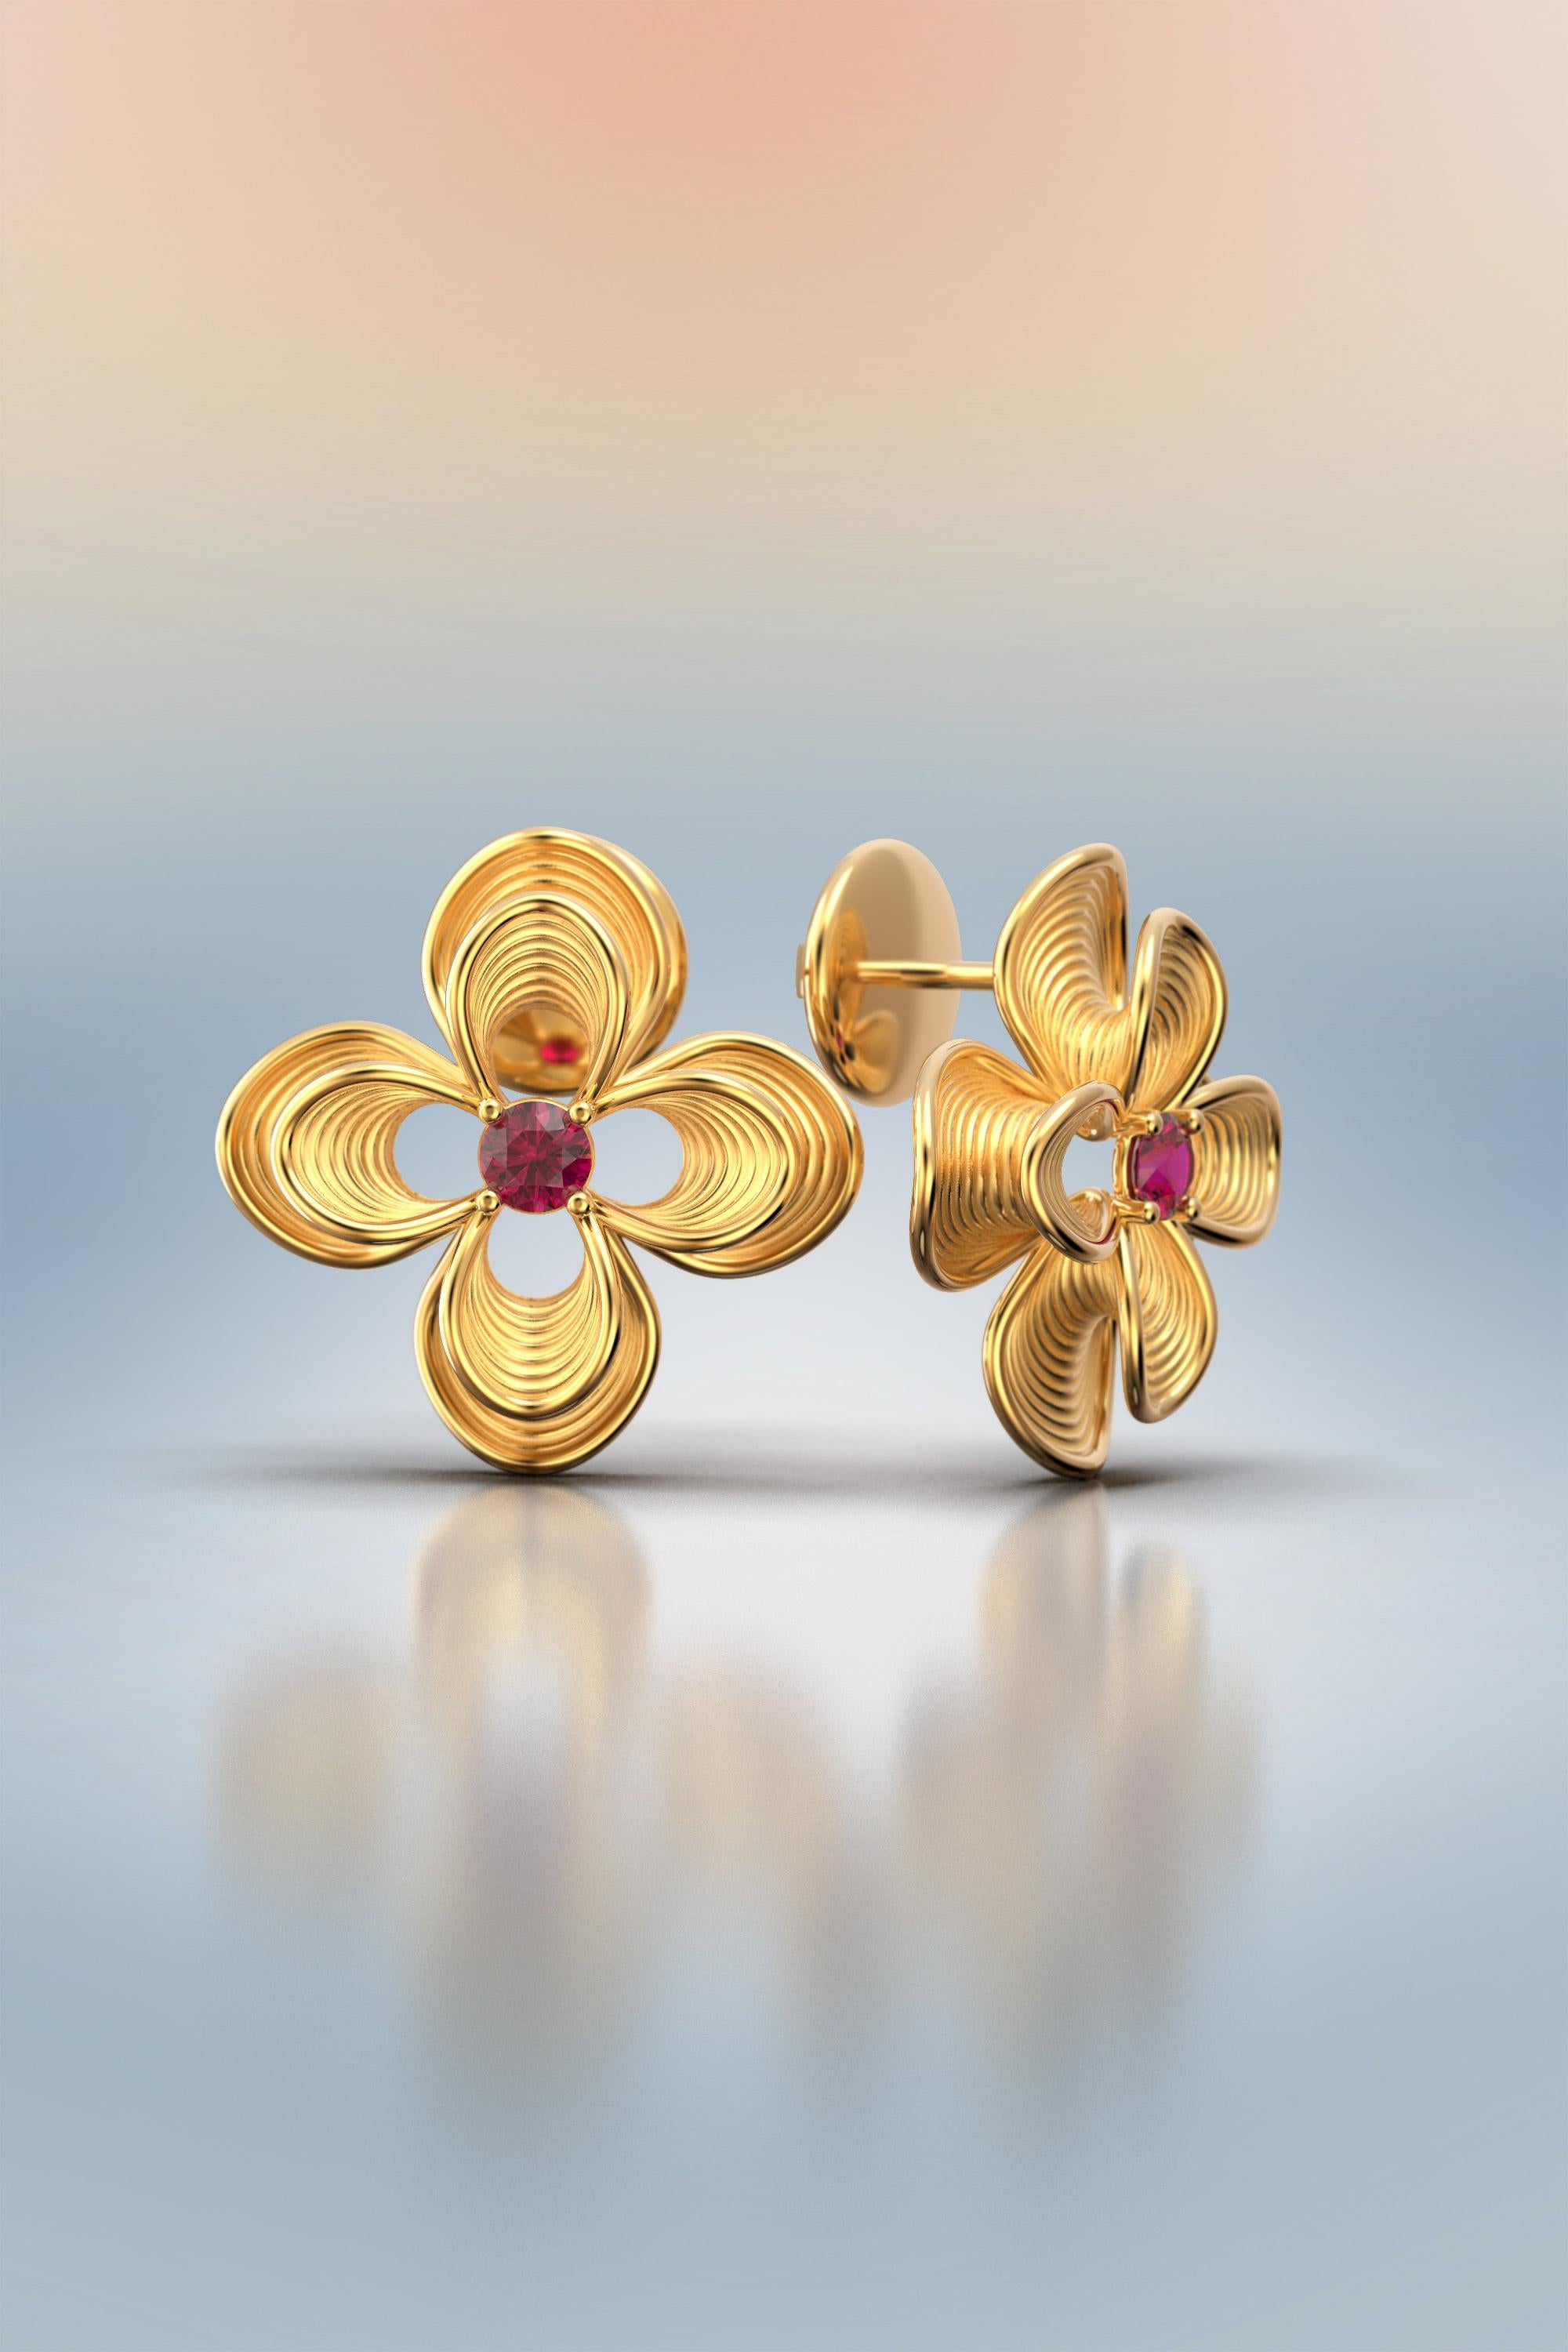 Ruby Stud Earrings in 18k Italian Gold by Oltremare Gioielli For Sale 1